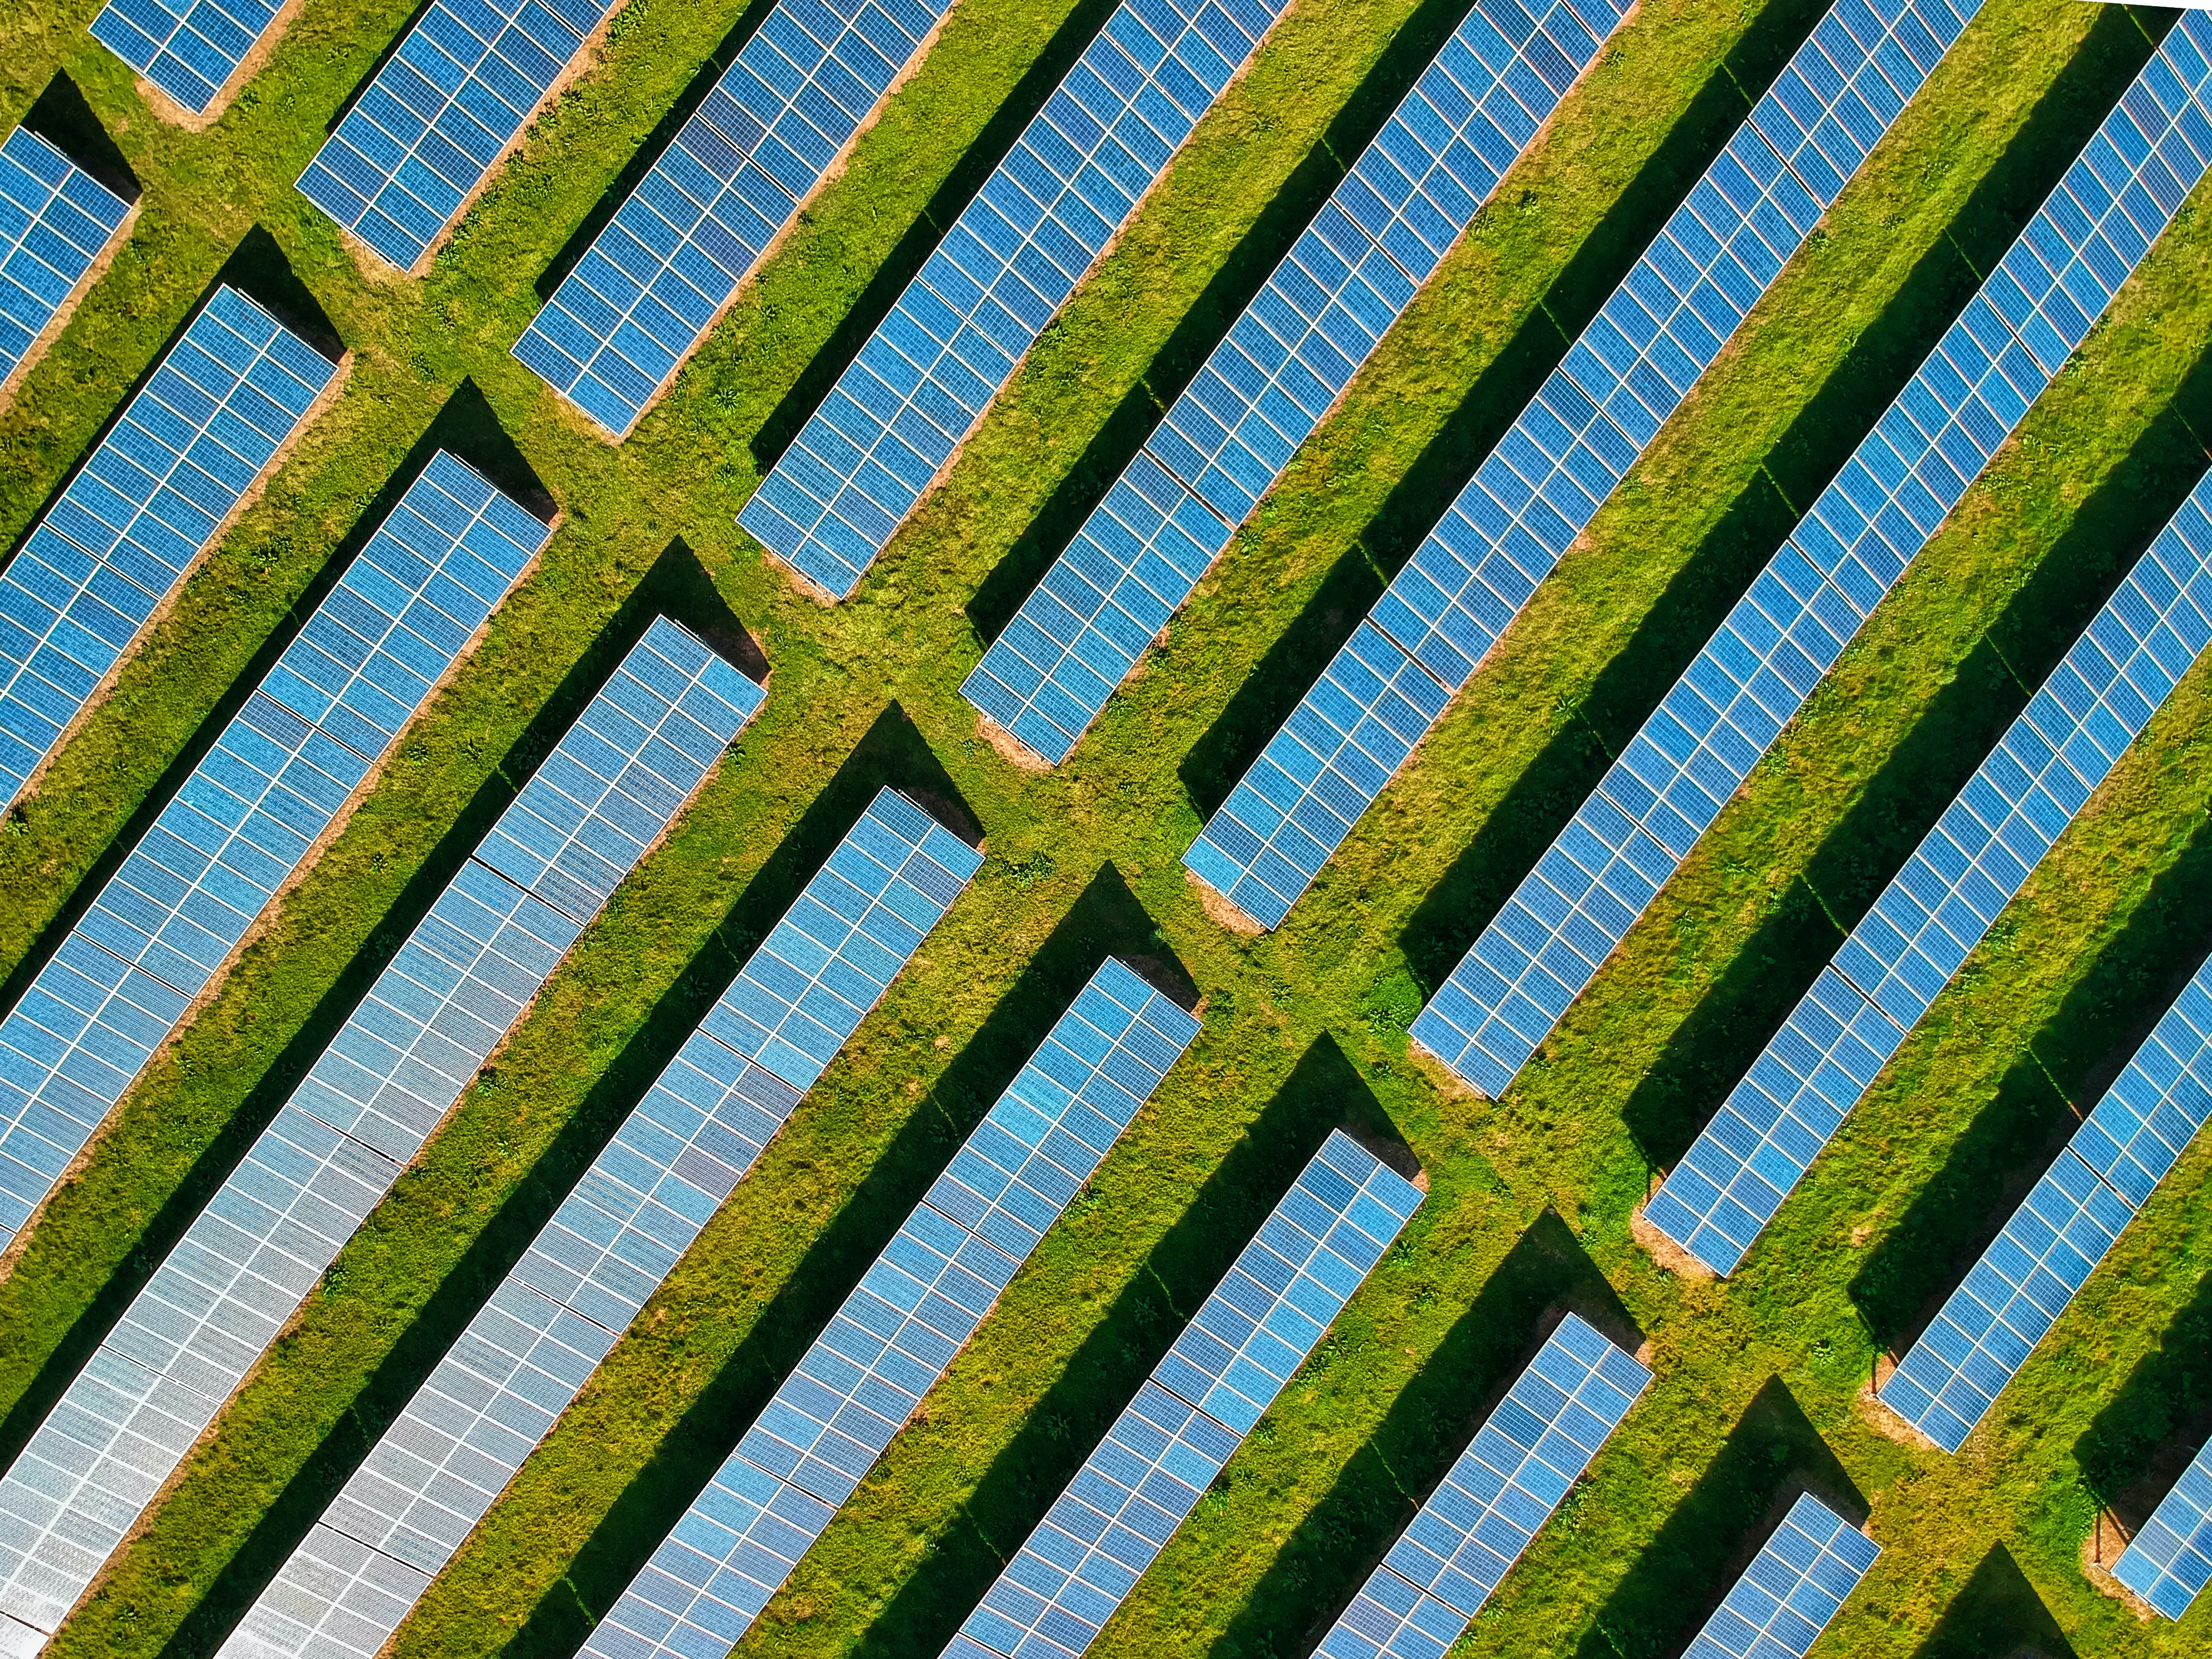 overhead shot of solar panels over a green field.